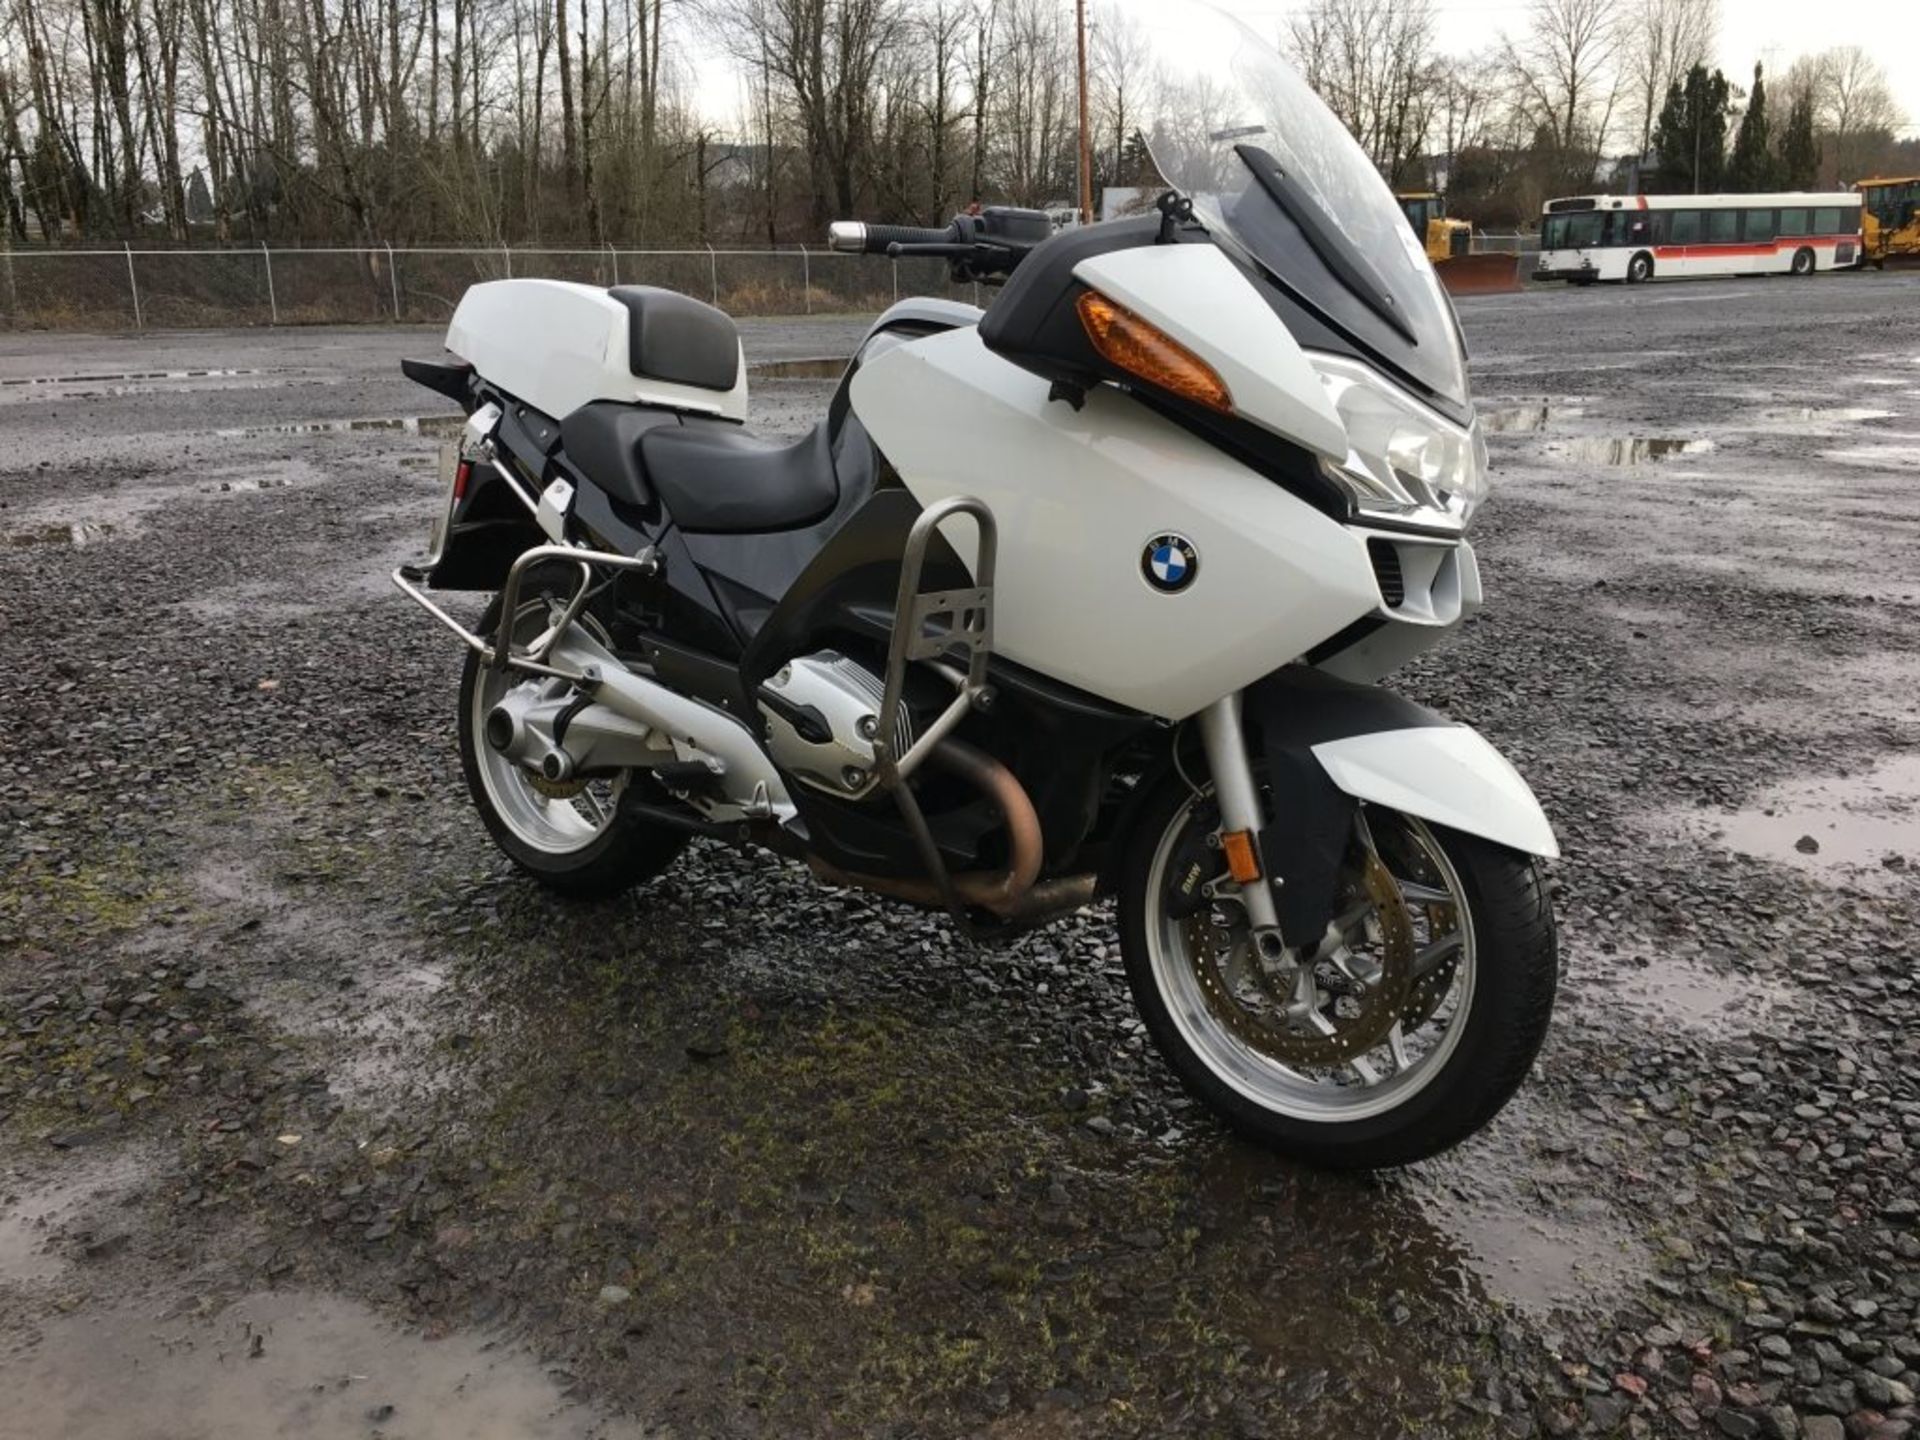 2006 BMW R12RTP Motorcycle - Image 4 of 16